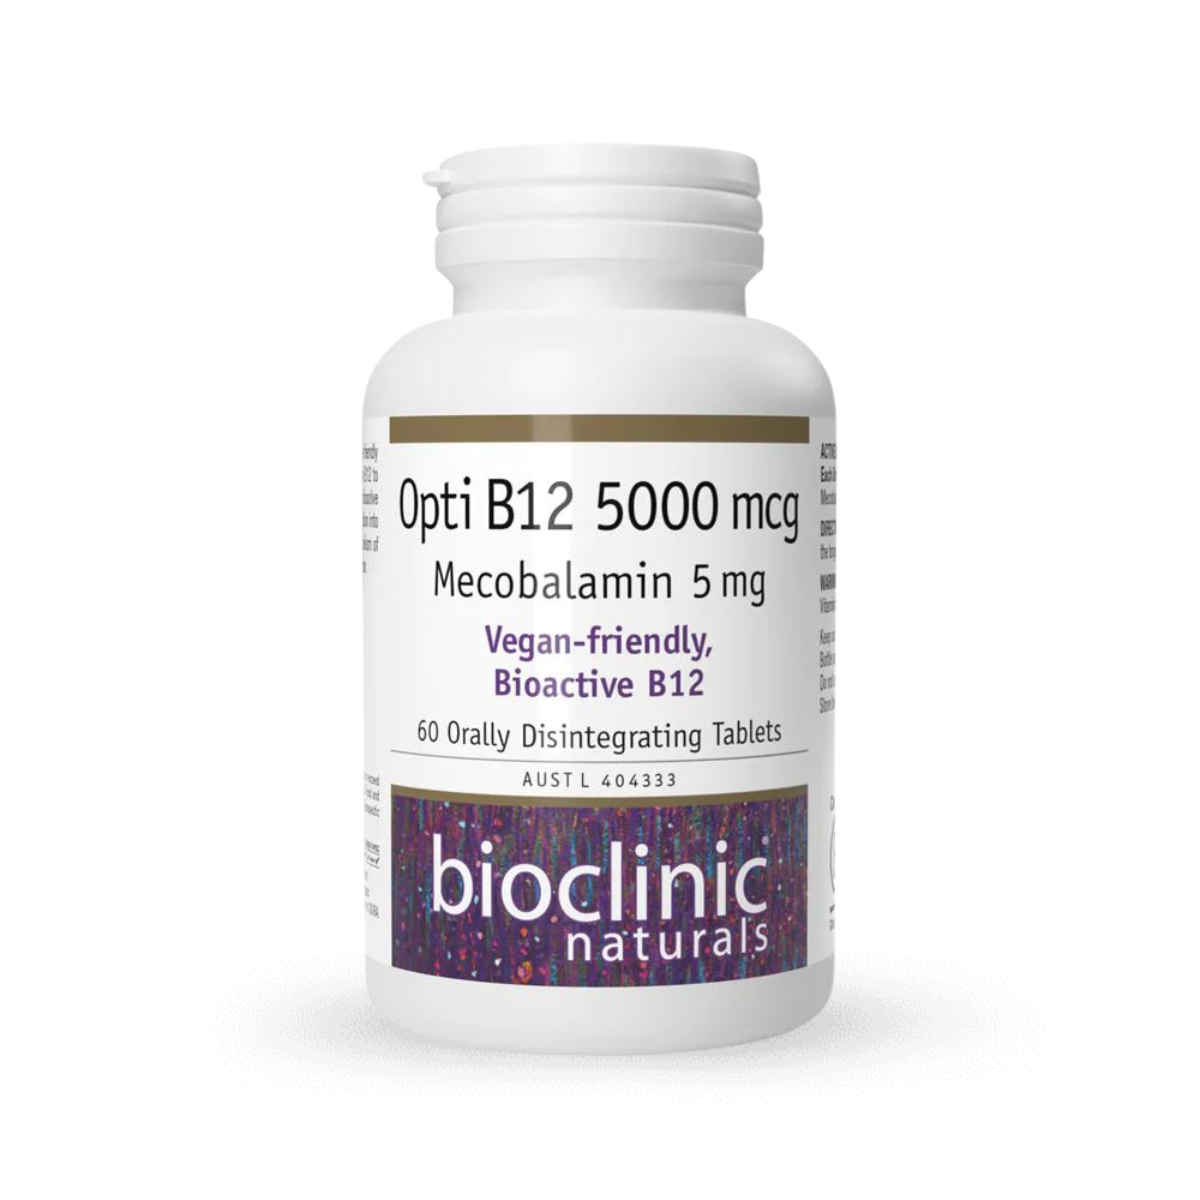 Bioclinic Naturals Opti B12 5000mcg Orally Disintegrating 60t